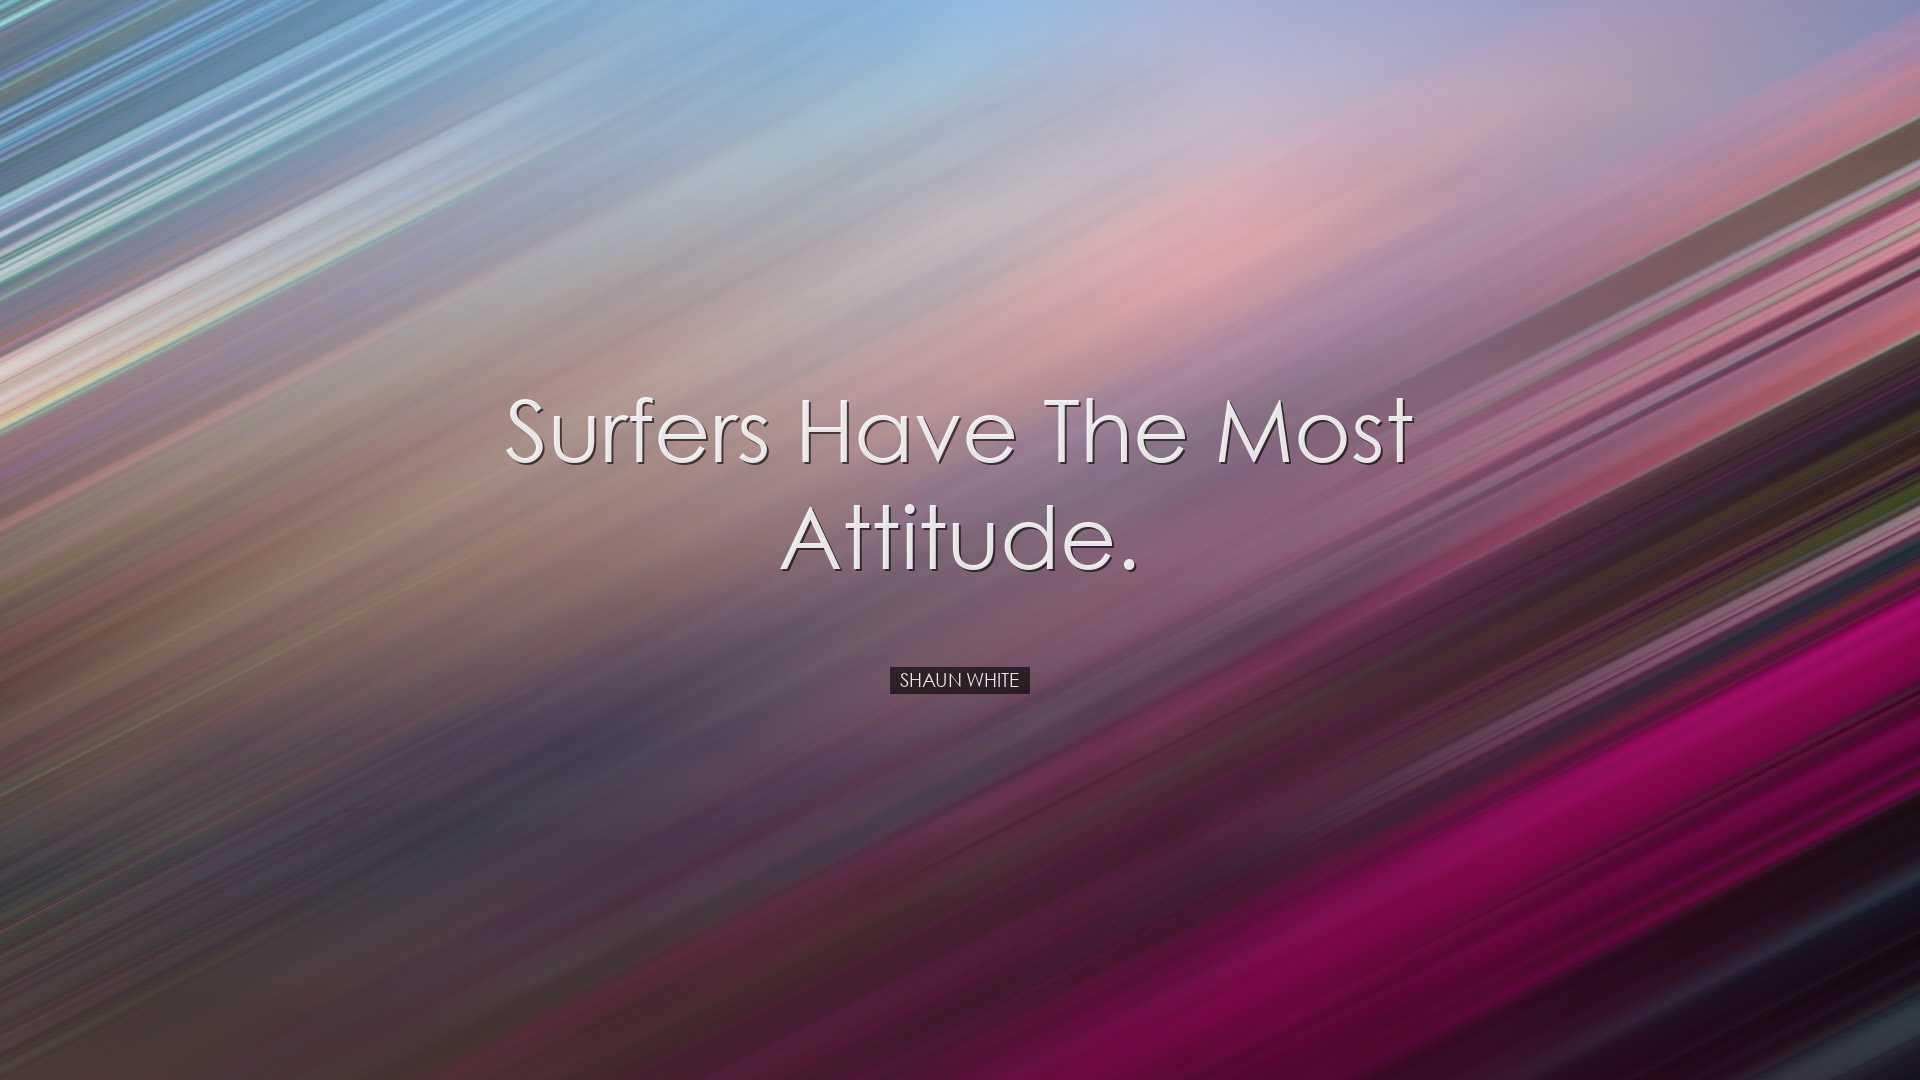 Surfers have the most attitude. - Shaun White